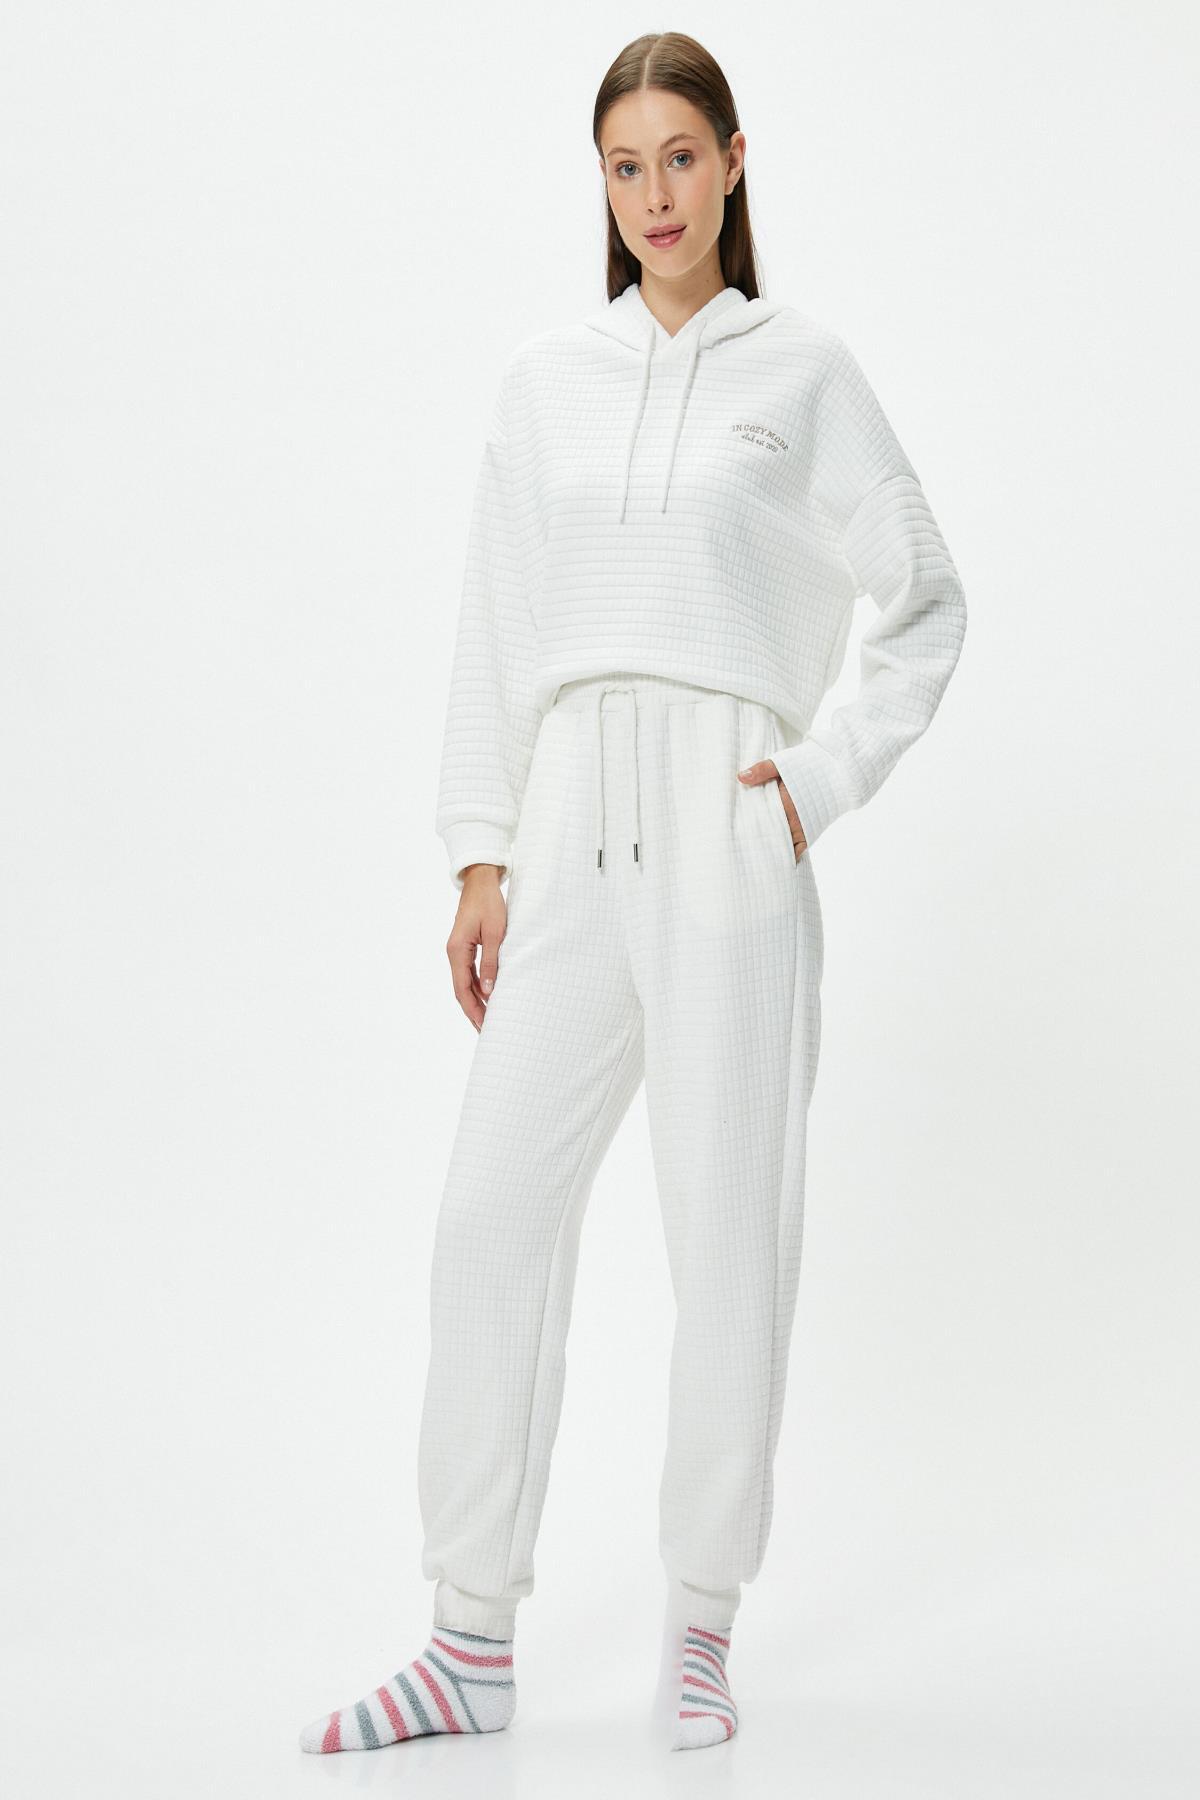 Женские белые пижамные штаны Koton, белый printio женские пижамные штаны белые кружки